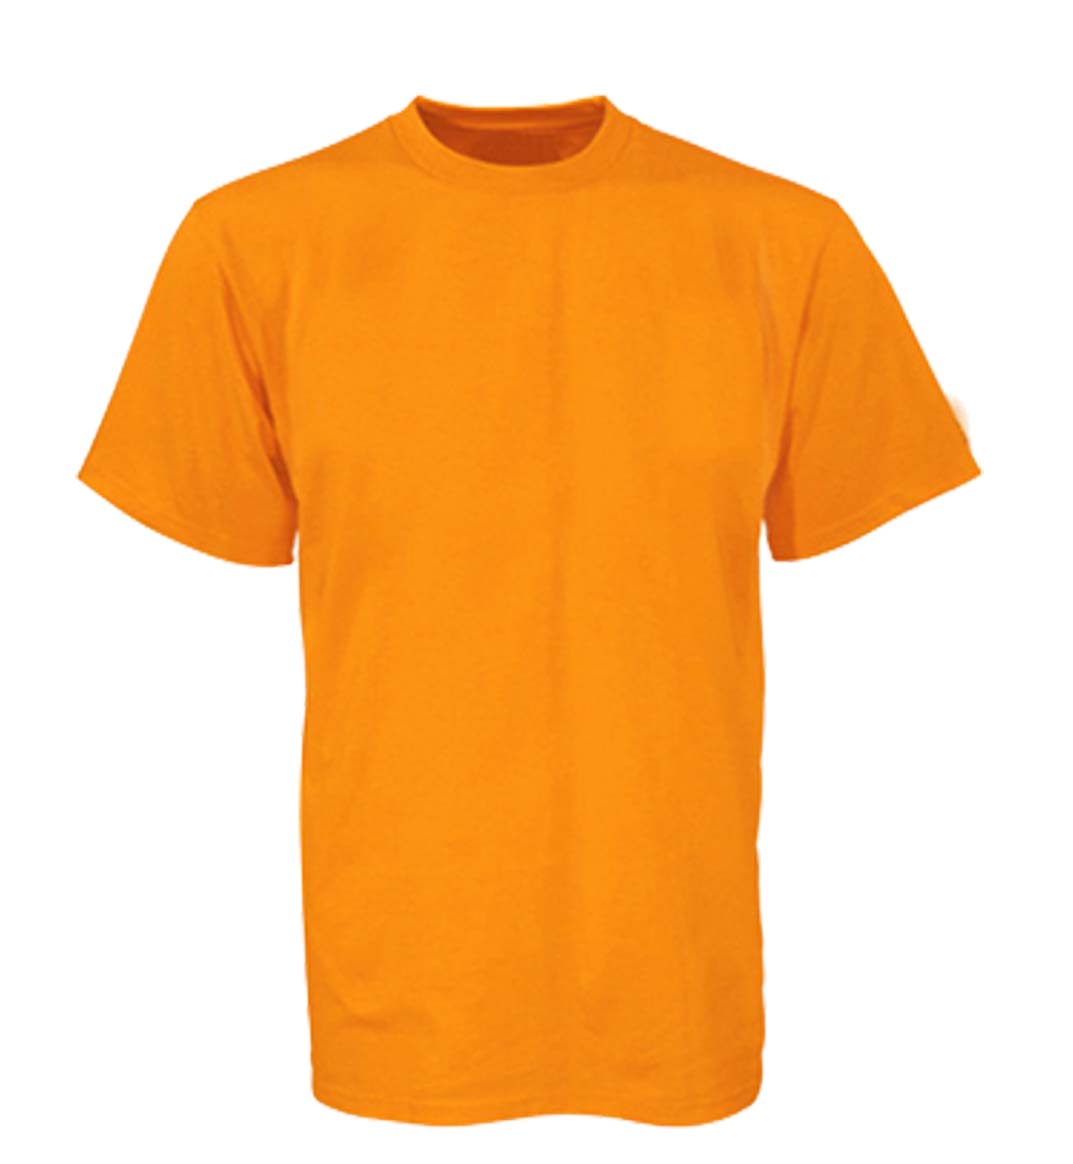 orange t shirt clipart - photo #40